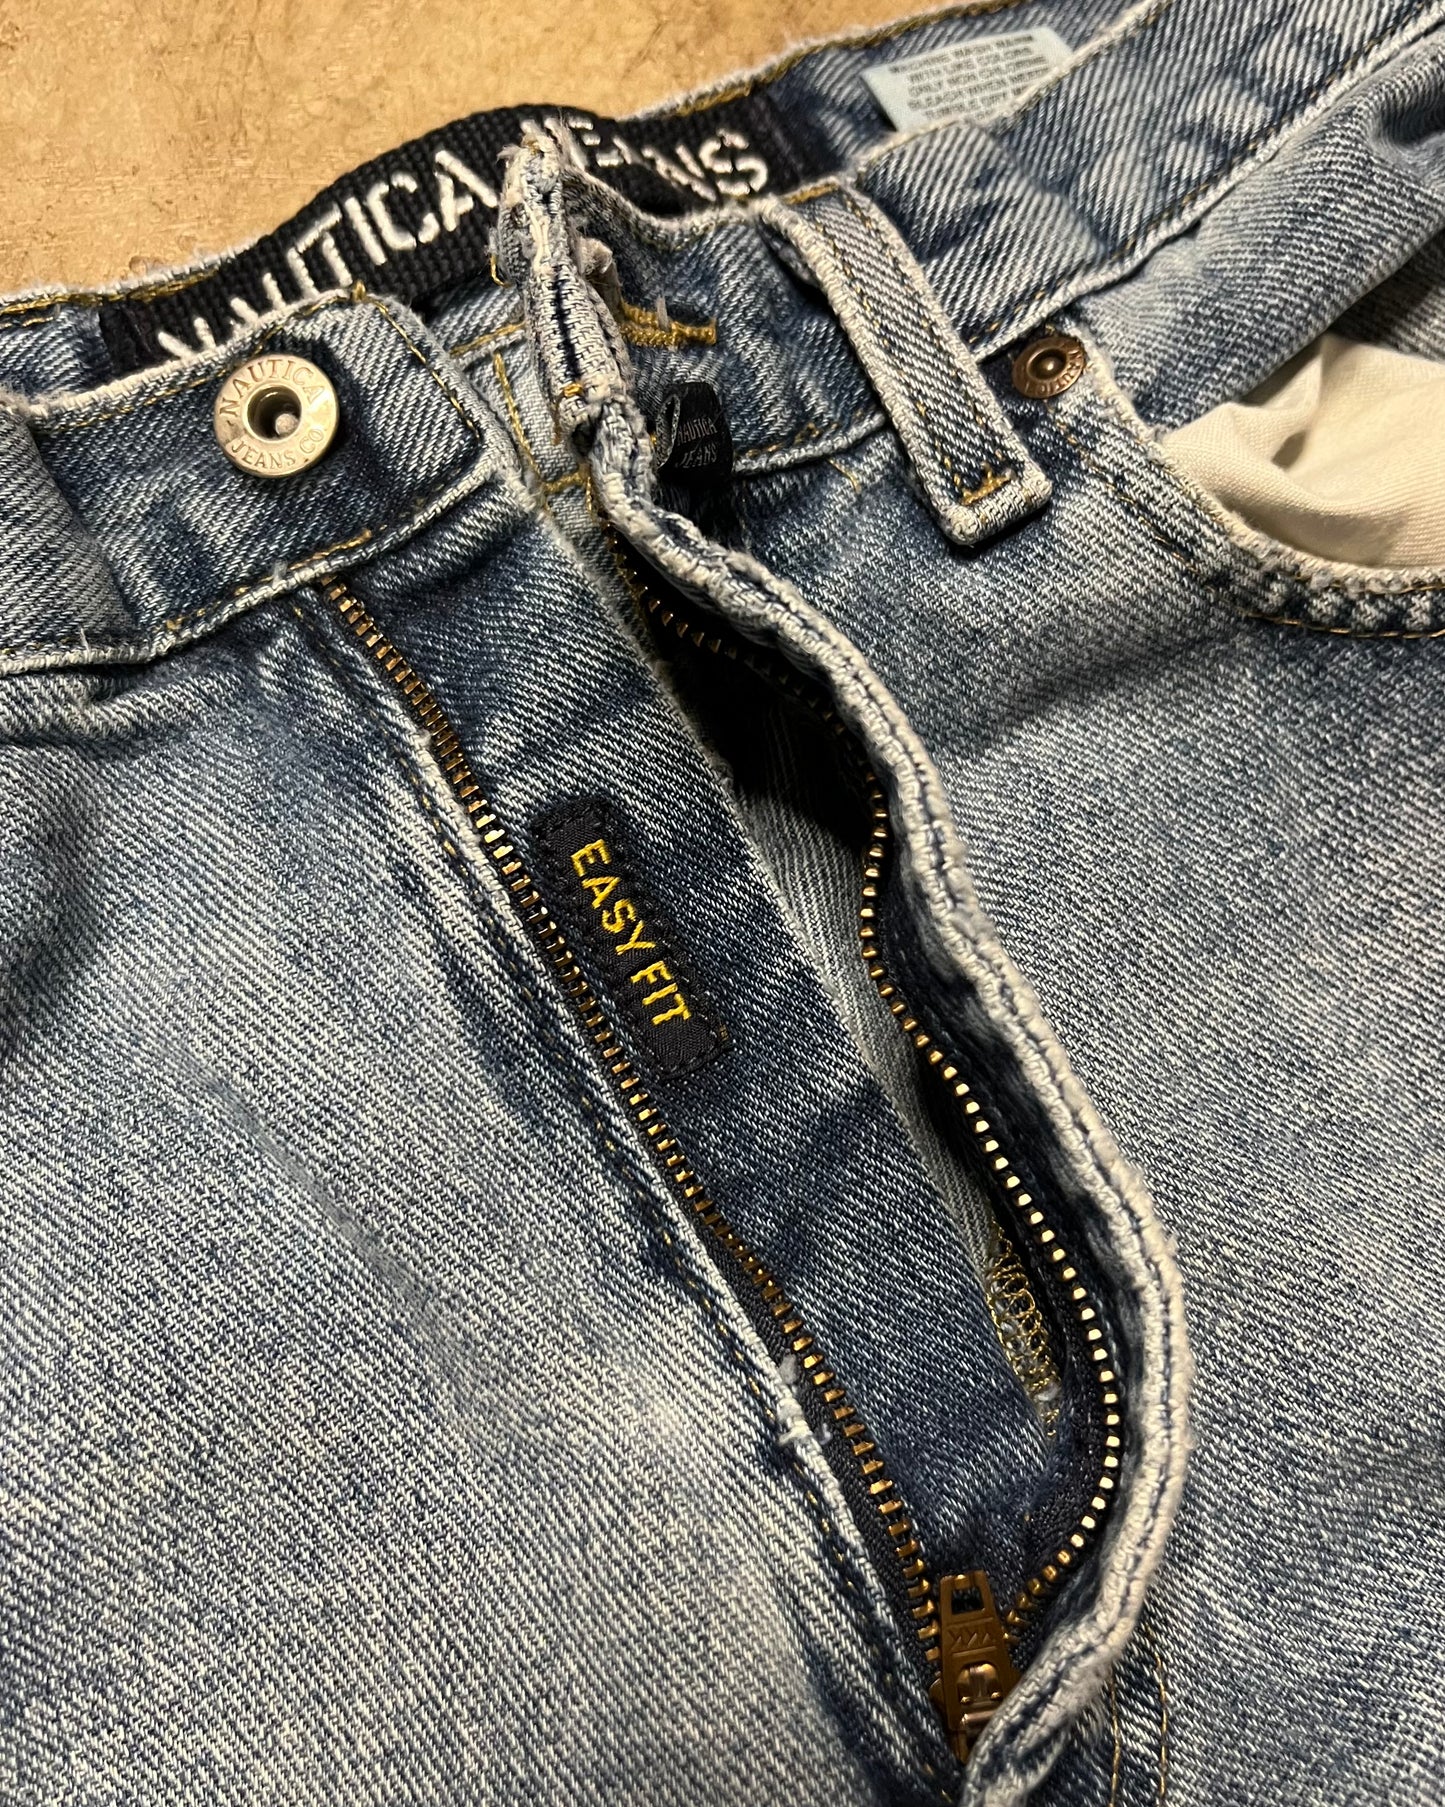 1990's Nautica Jeans Company Baggy Denim Pants